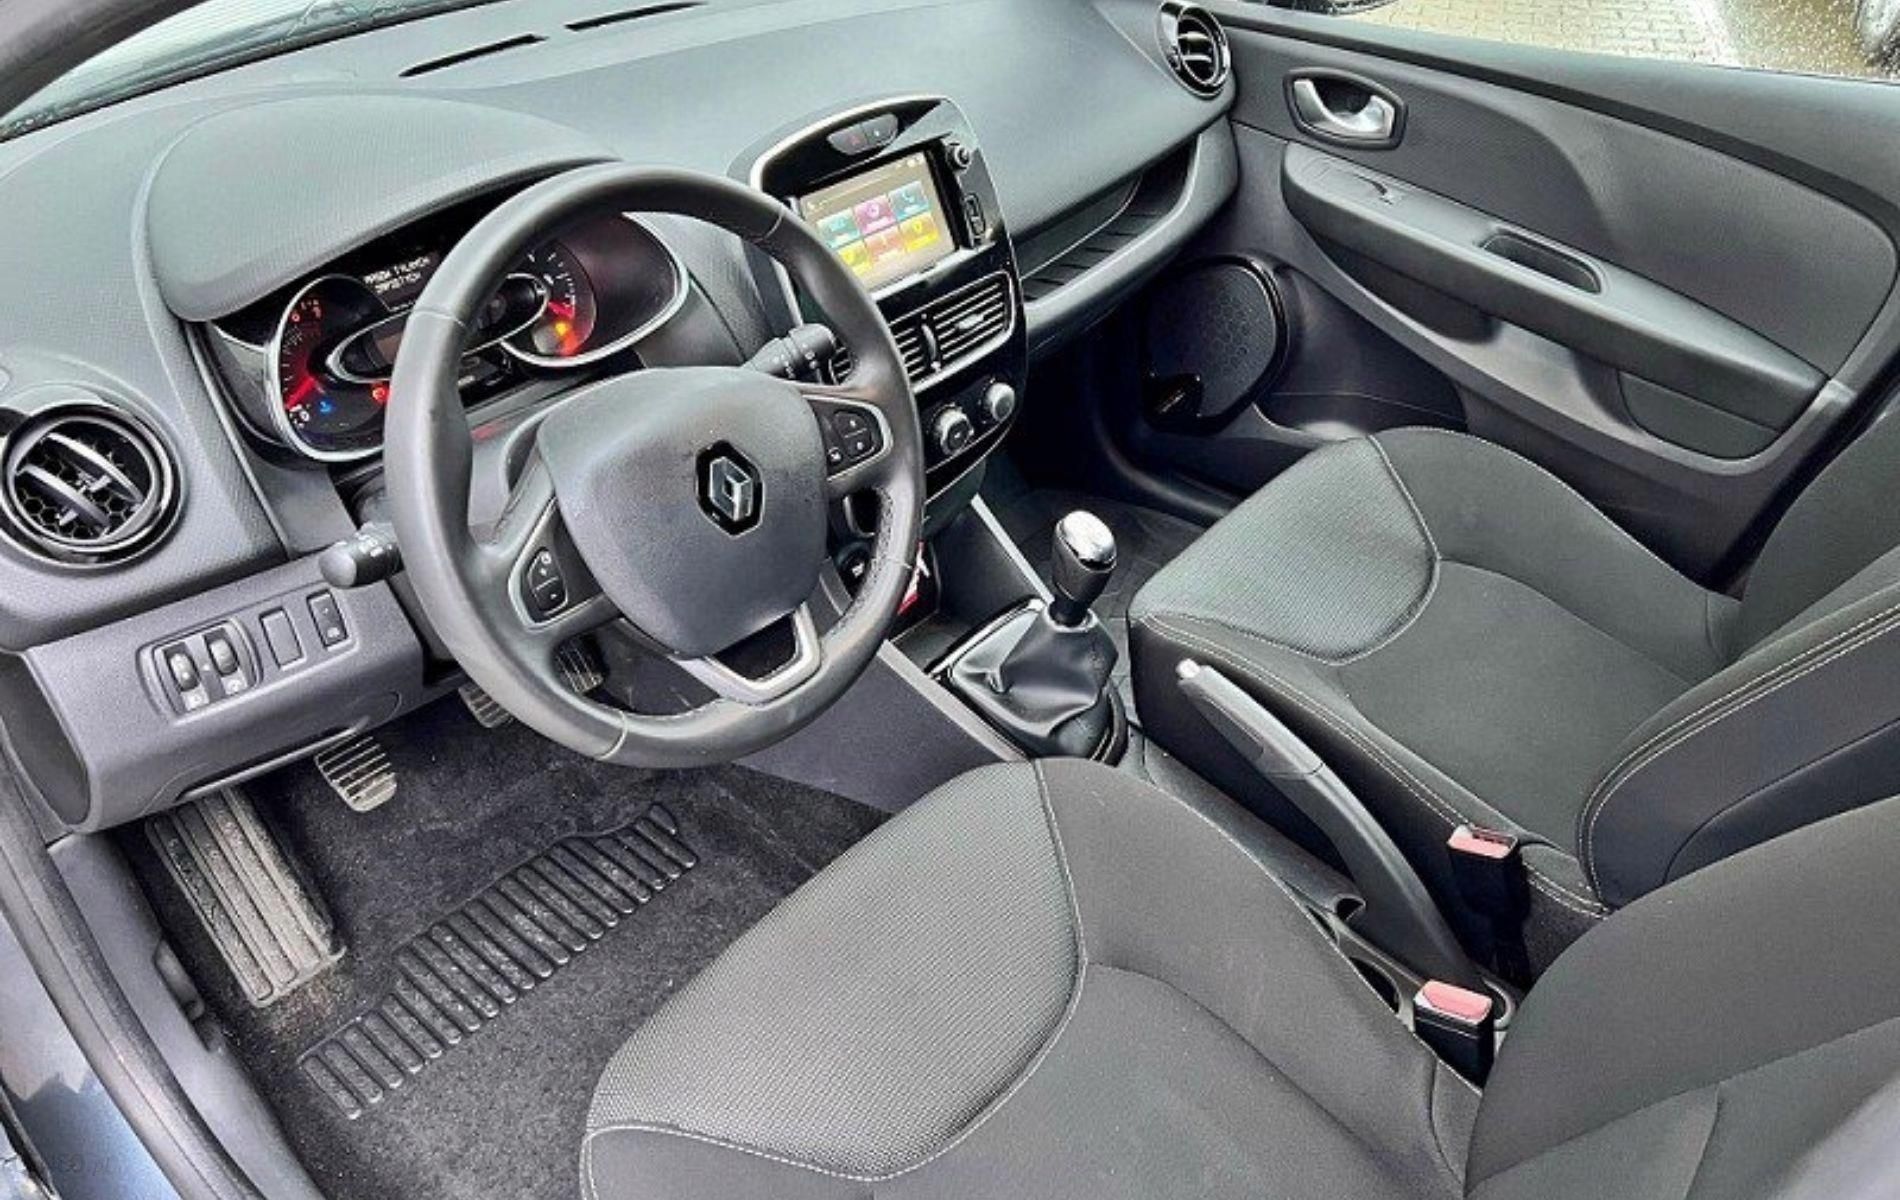 Renault Clio IV 0.9 (90 KM) Alize Energy hatchback